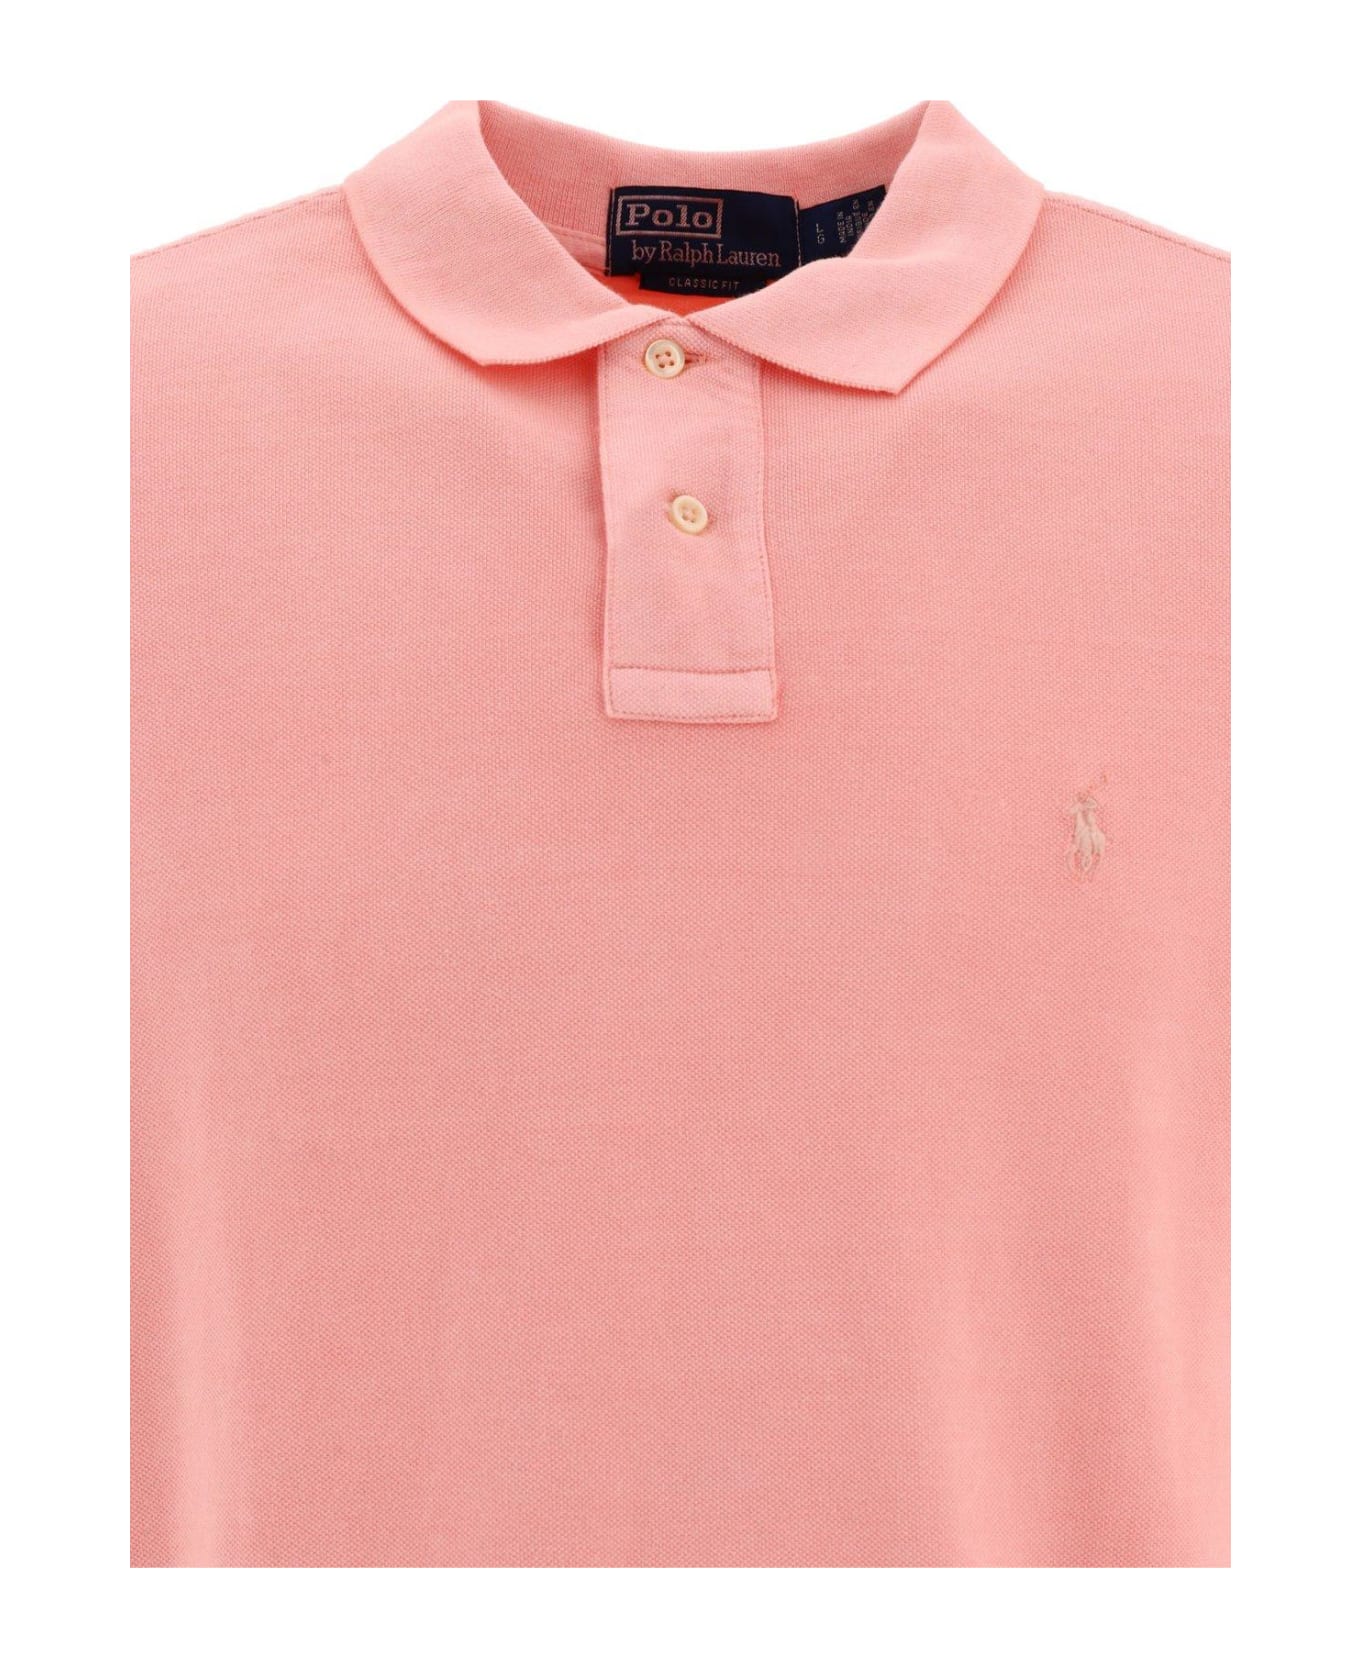 Ralph Lauren Polo Pony Embroidered Polo Shirt - Pink